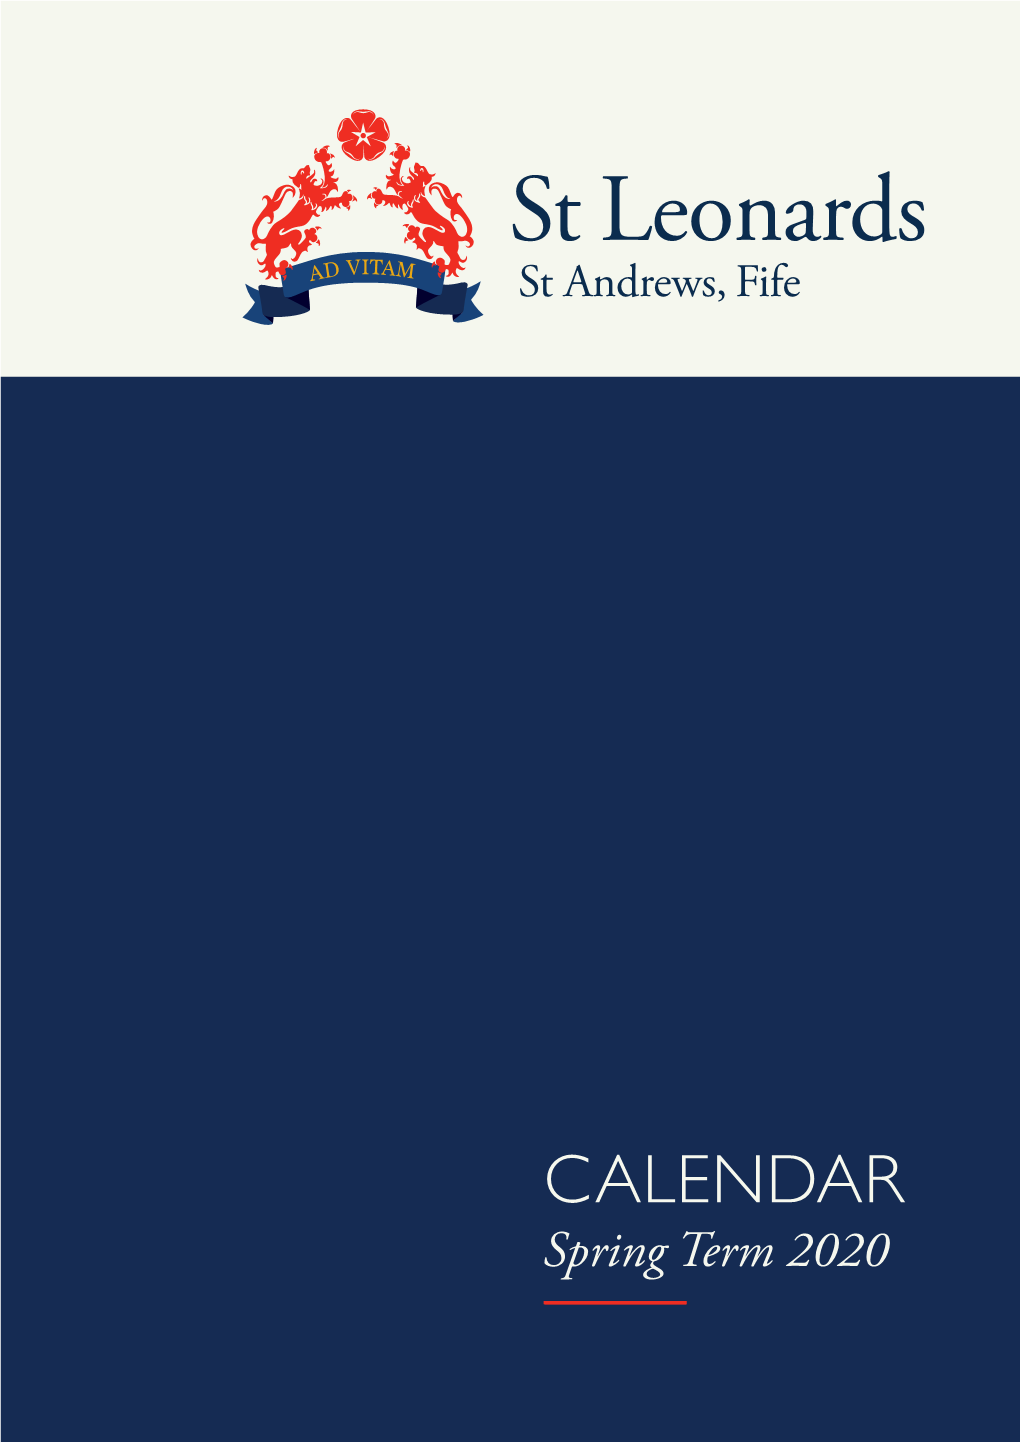 St Leonards School Calendar Spring 2020.Indd